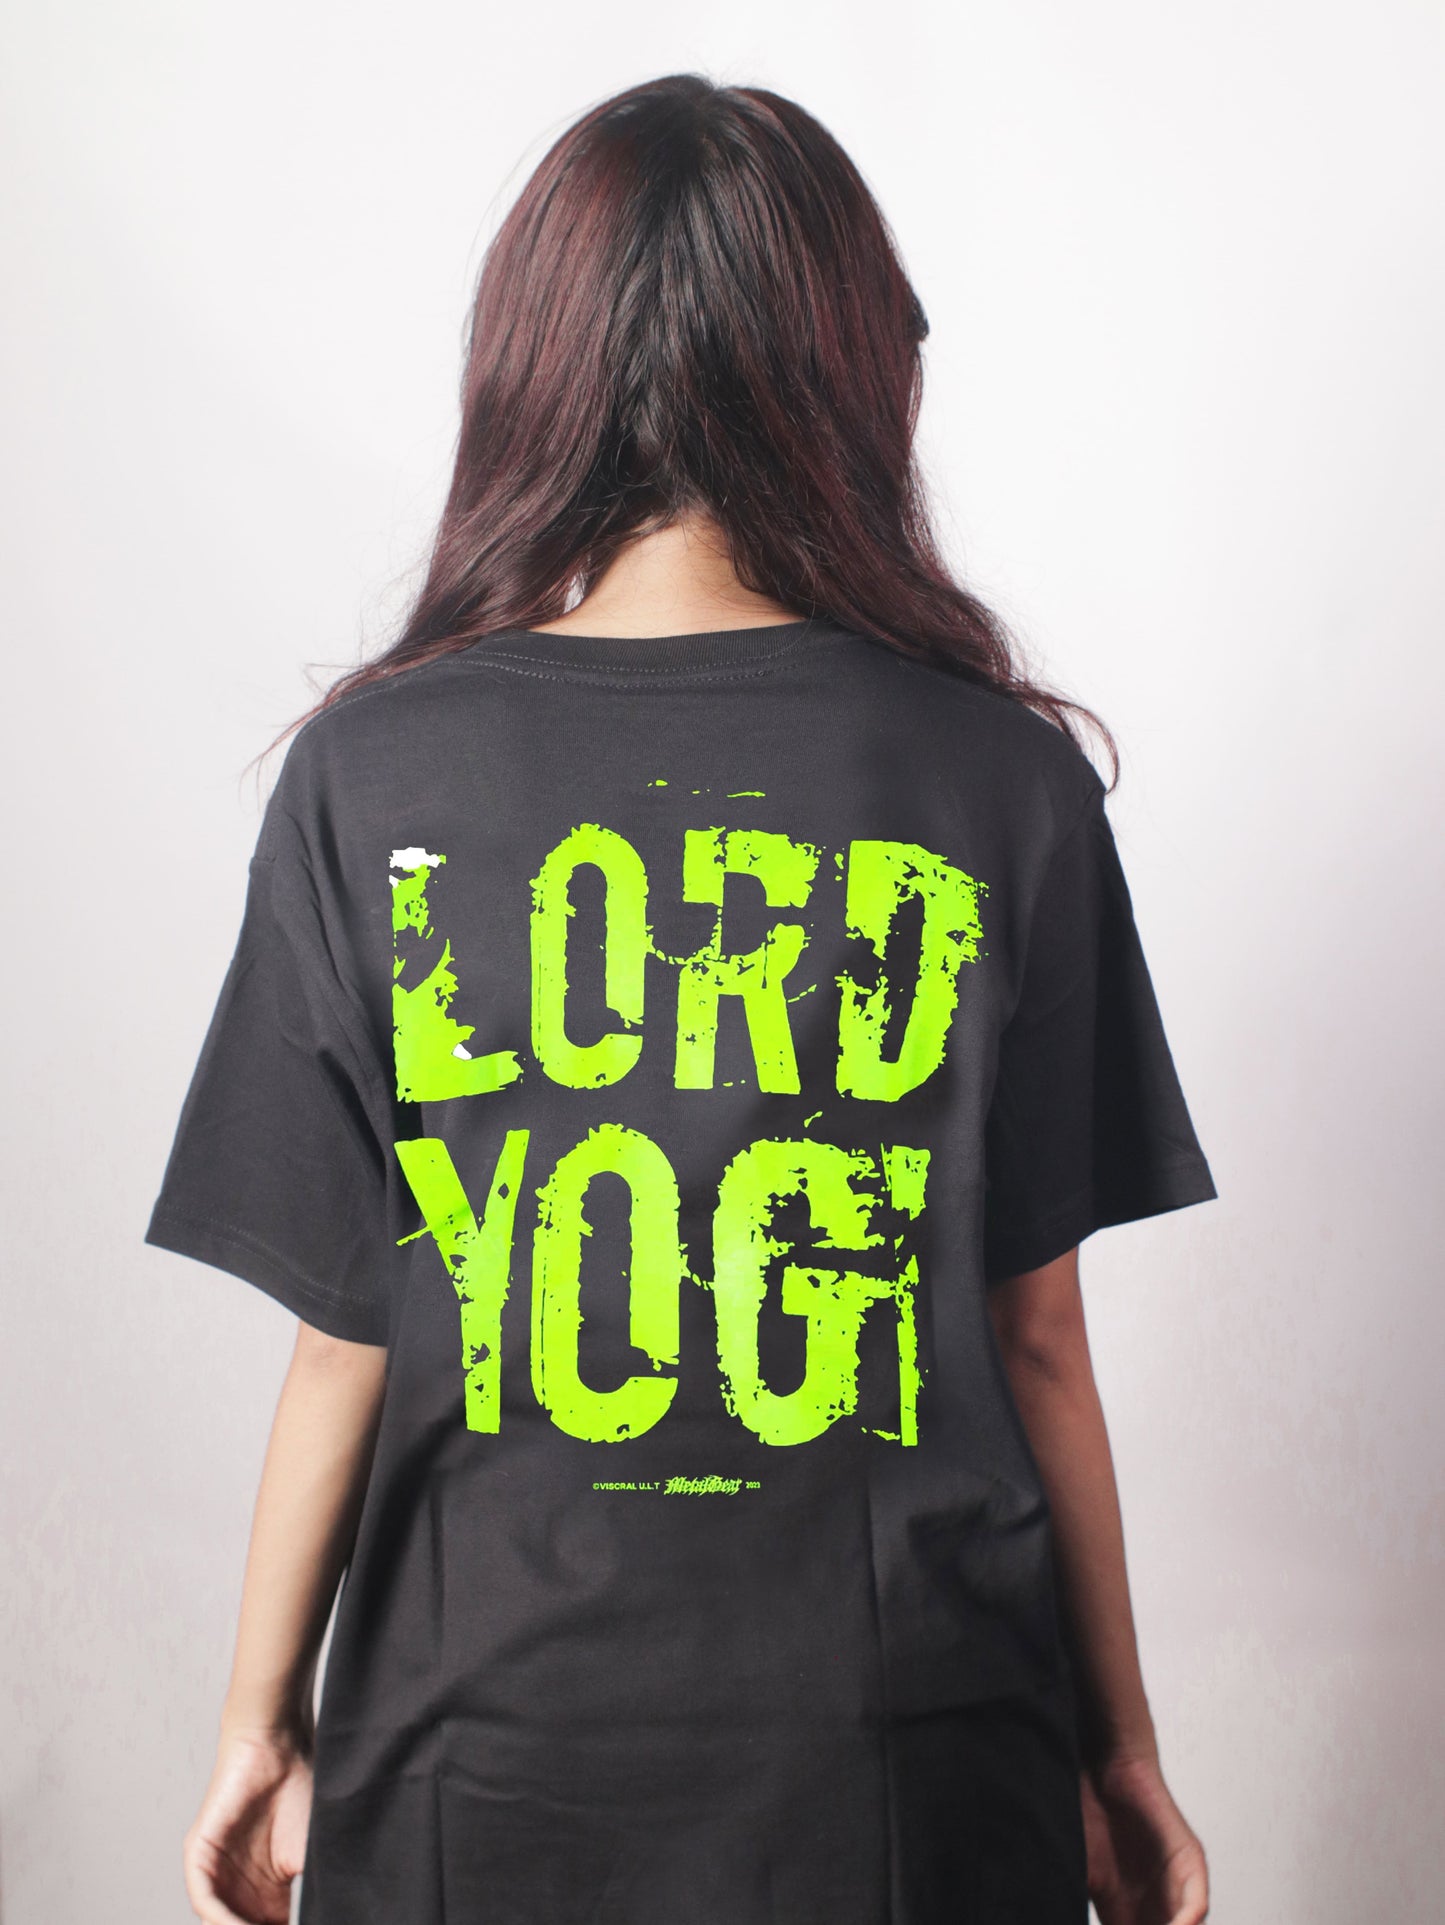 T-shirt Dewasa Official Merchandise Viscral - Lord Yogi Black